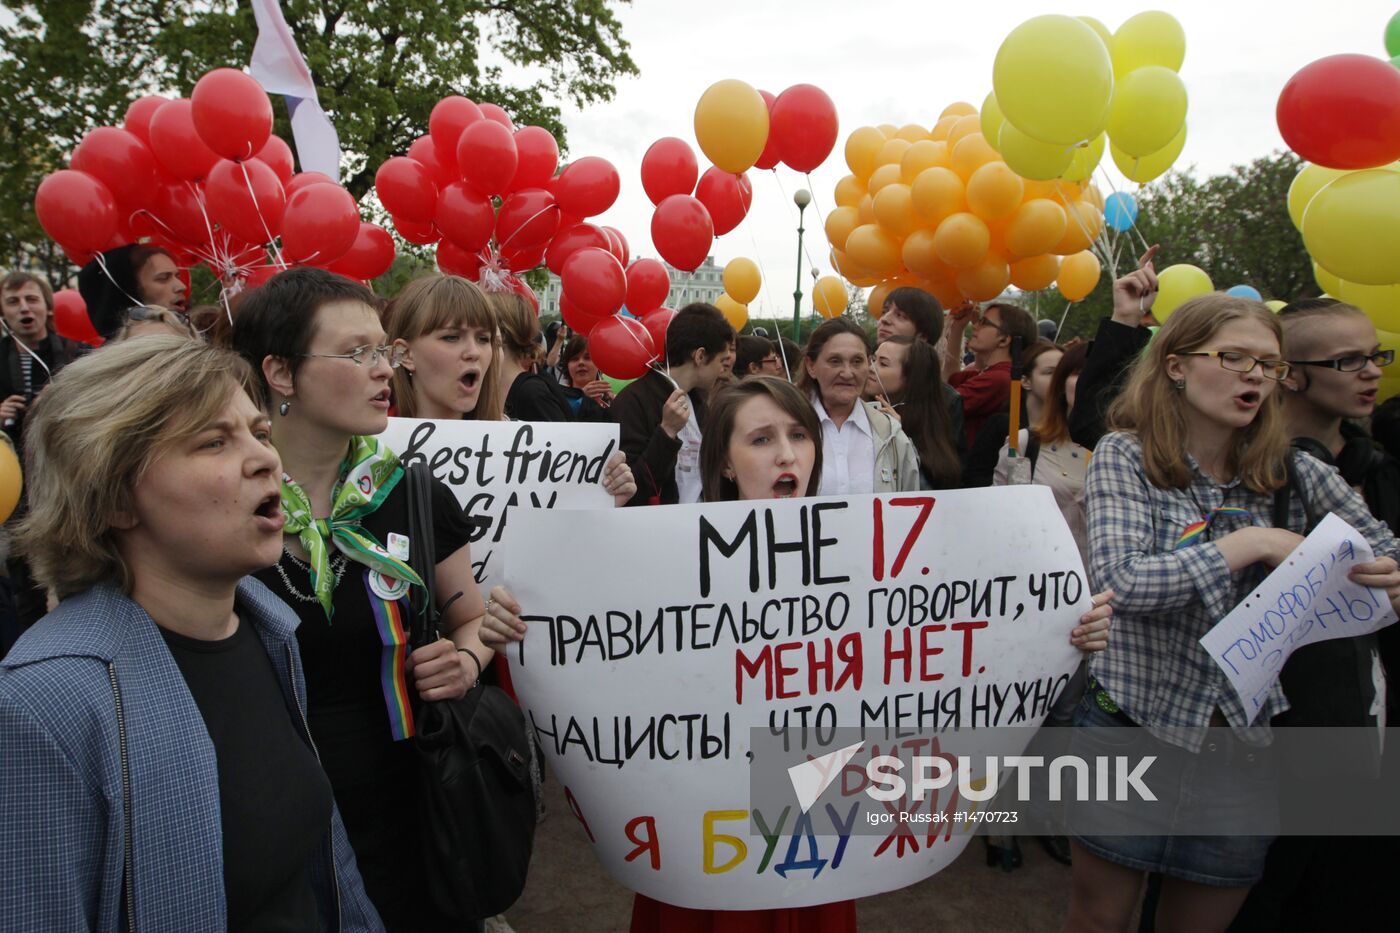 Rallies in St Petersburg on International Day Against Homophobia